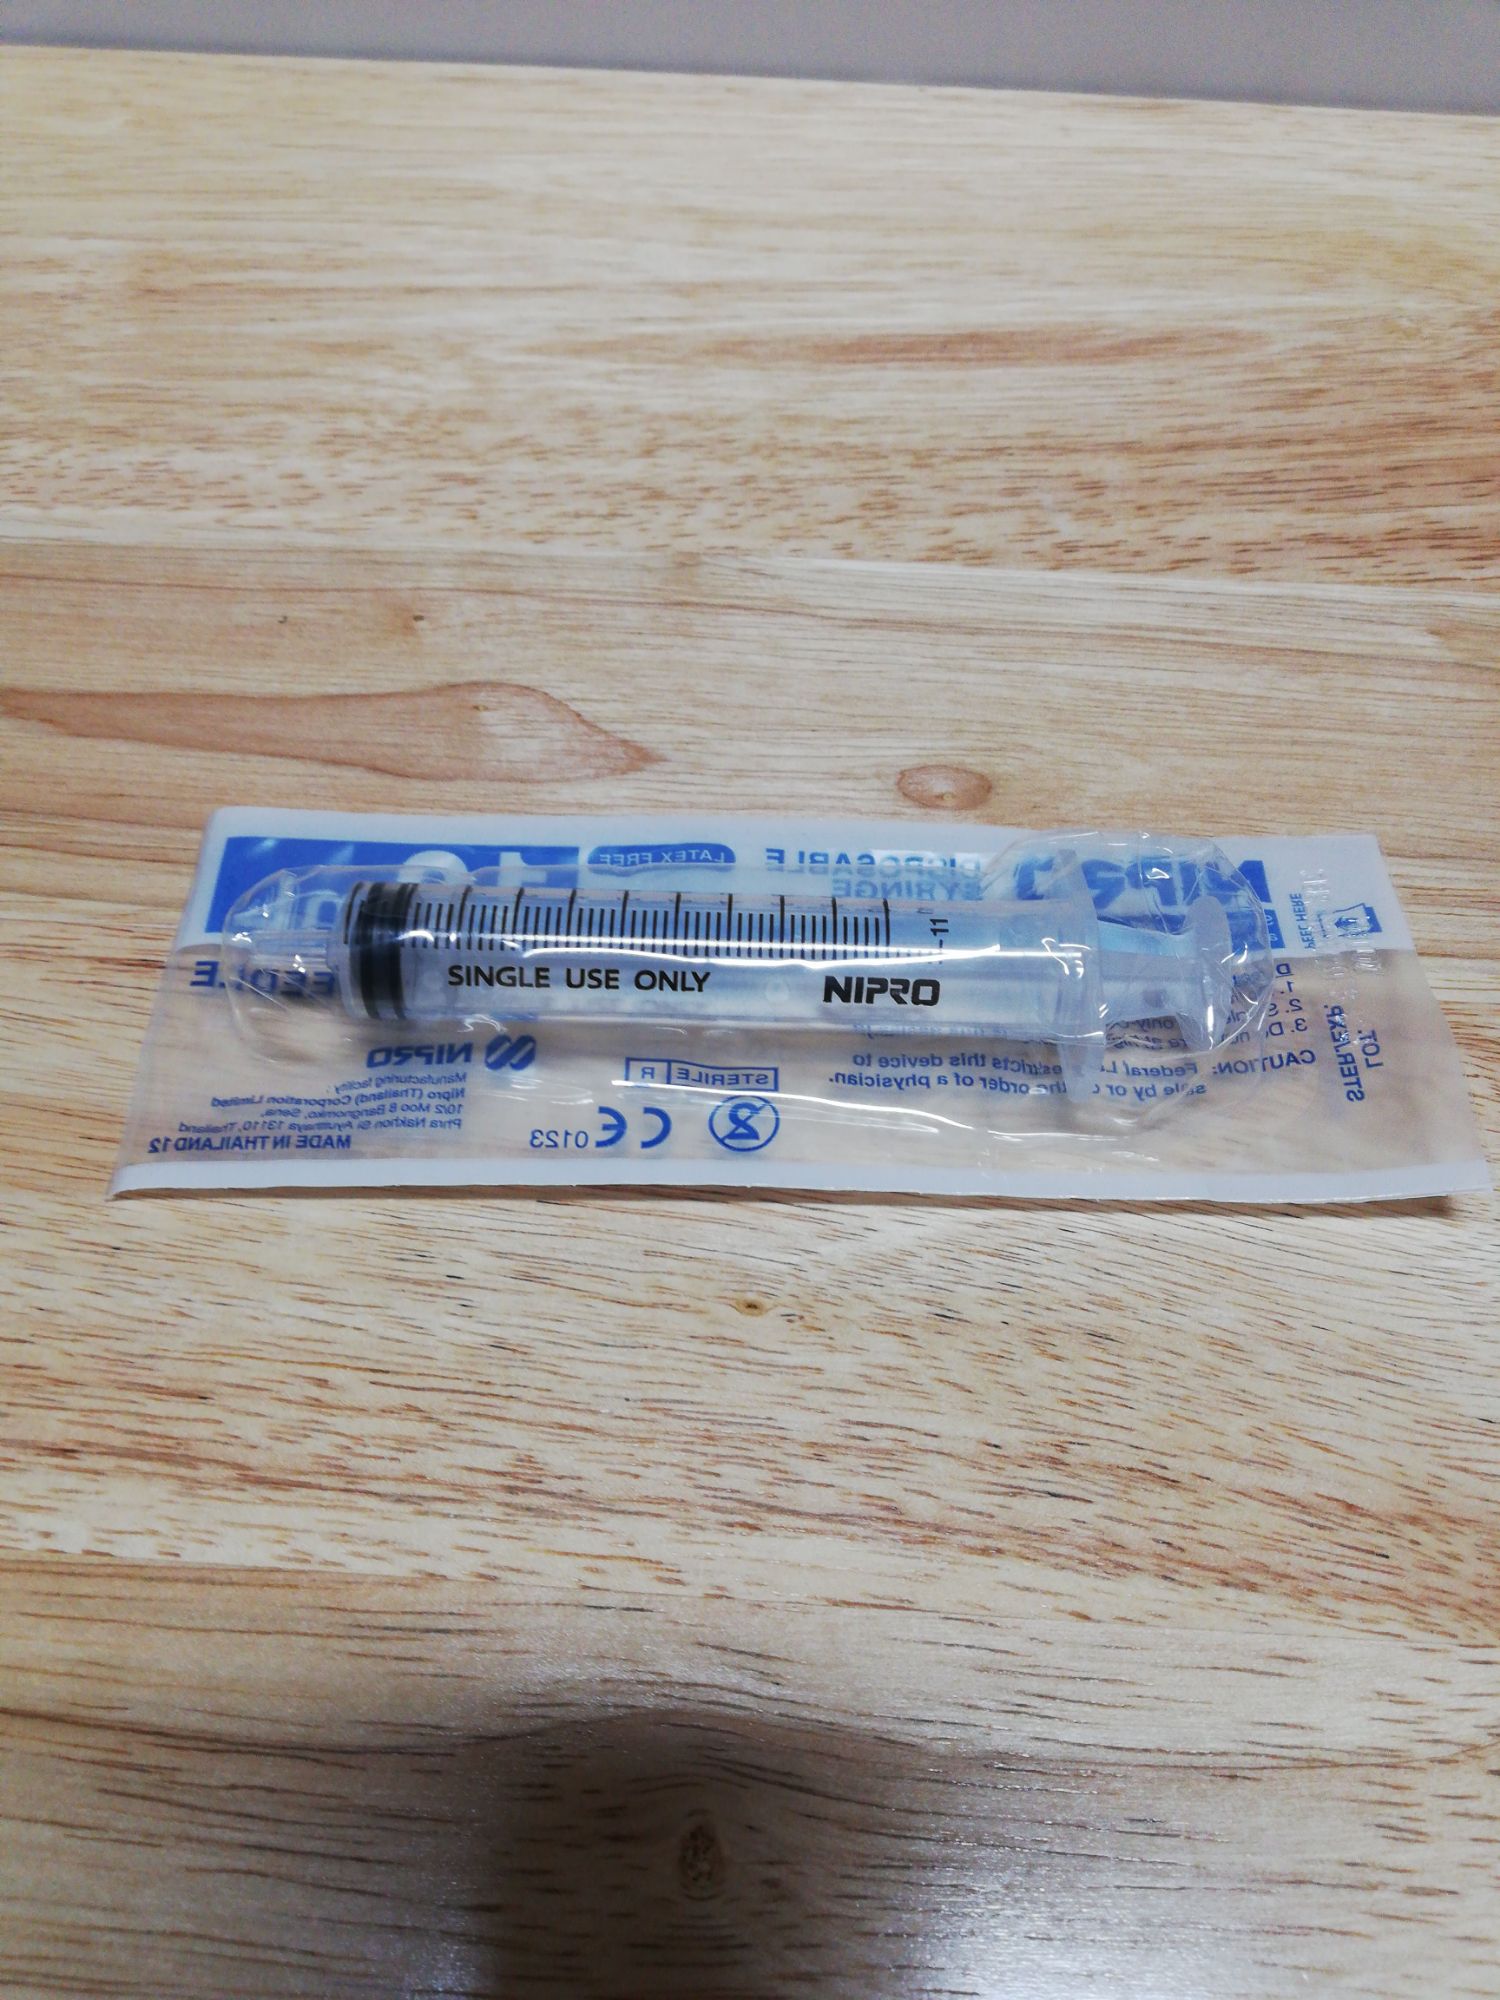 NIPRO ไซริ้งแบบใช้แล้วทิ้ง disposable syringe 10 ml